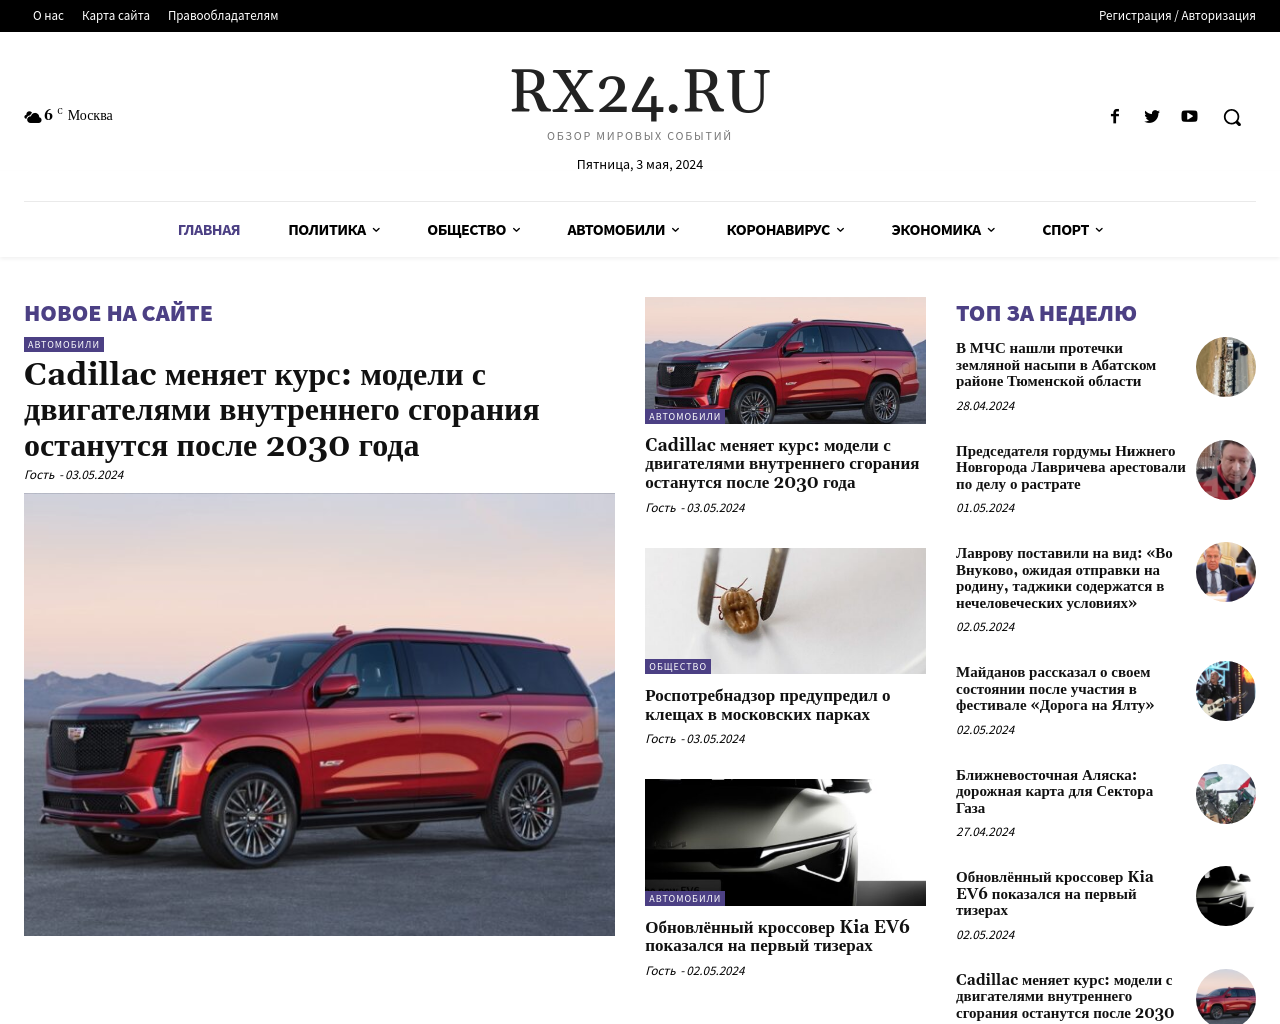 rx24.ru